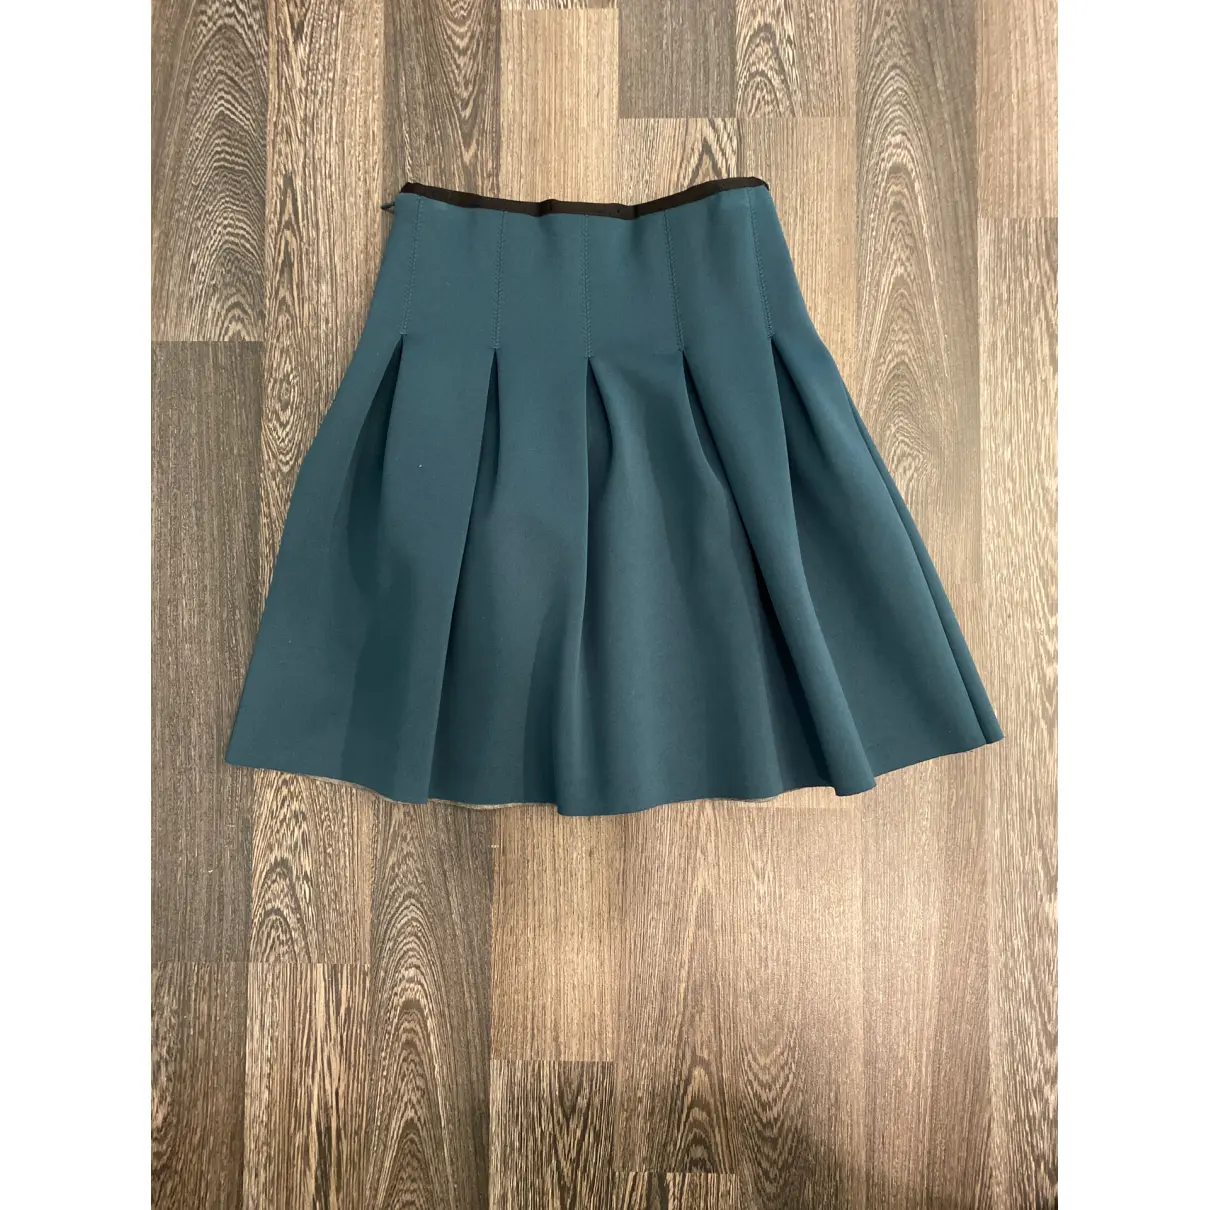 Buy T by Alexander Wang Mini skirt online